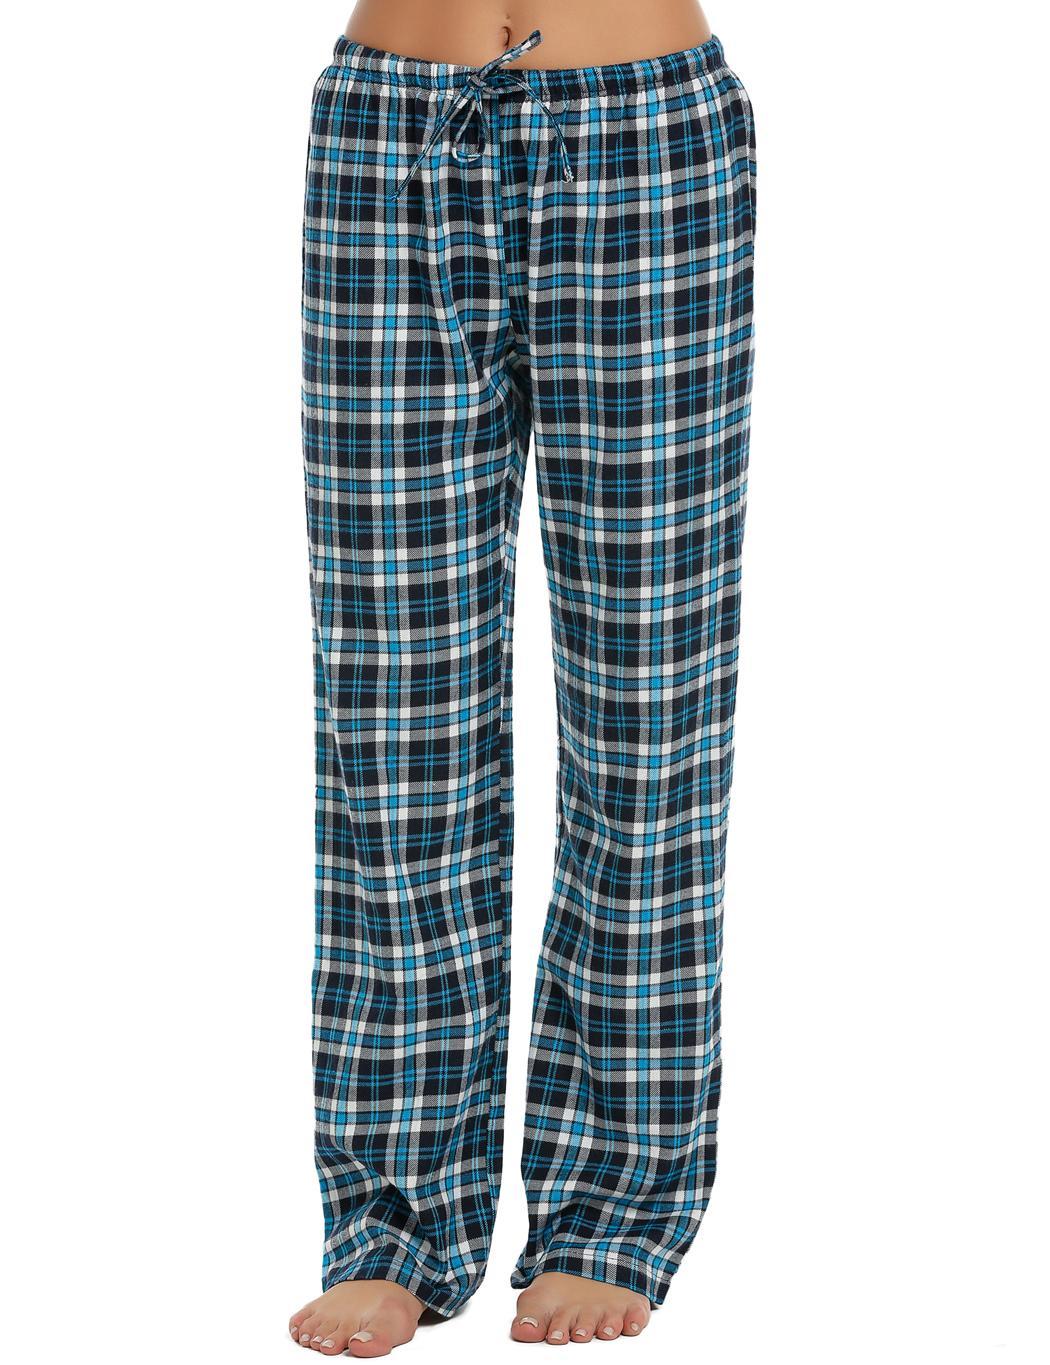 Women Elastic Waist Plaid Long Pajama Bottom Lounge Pants EHE8 | eBay